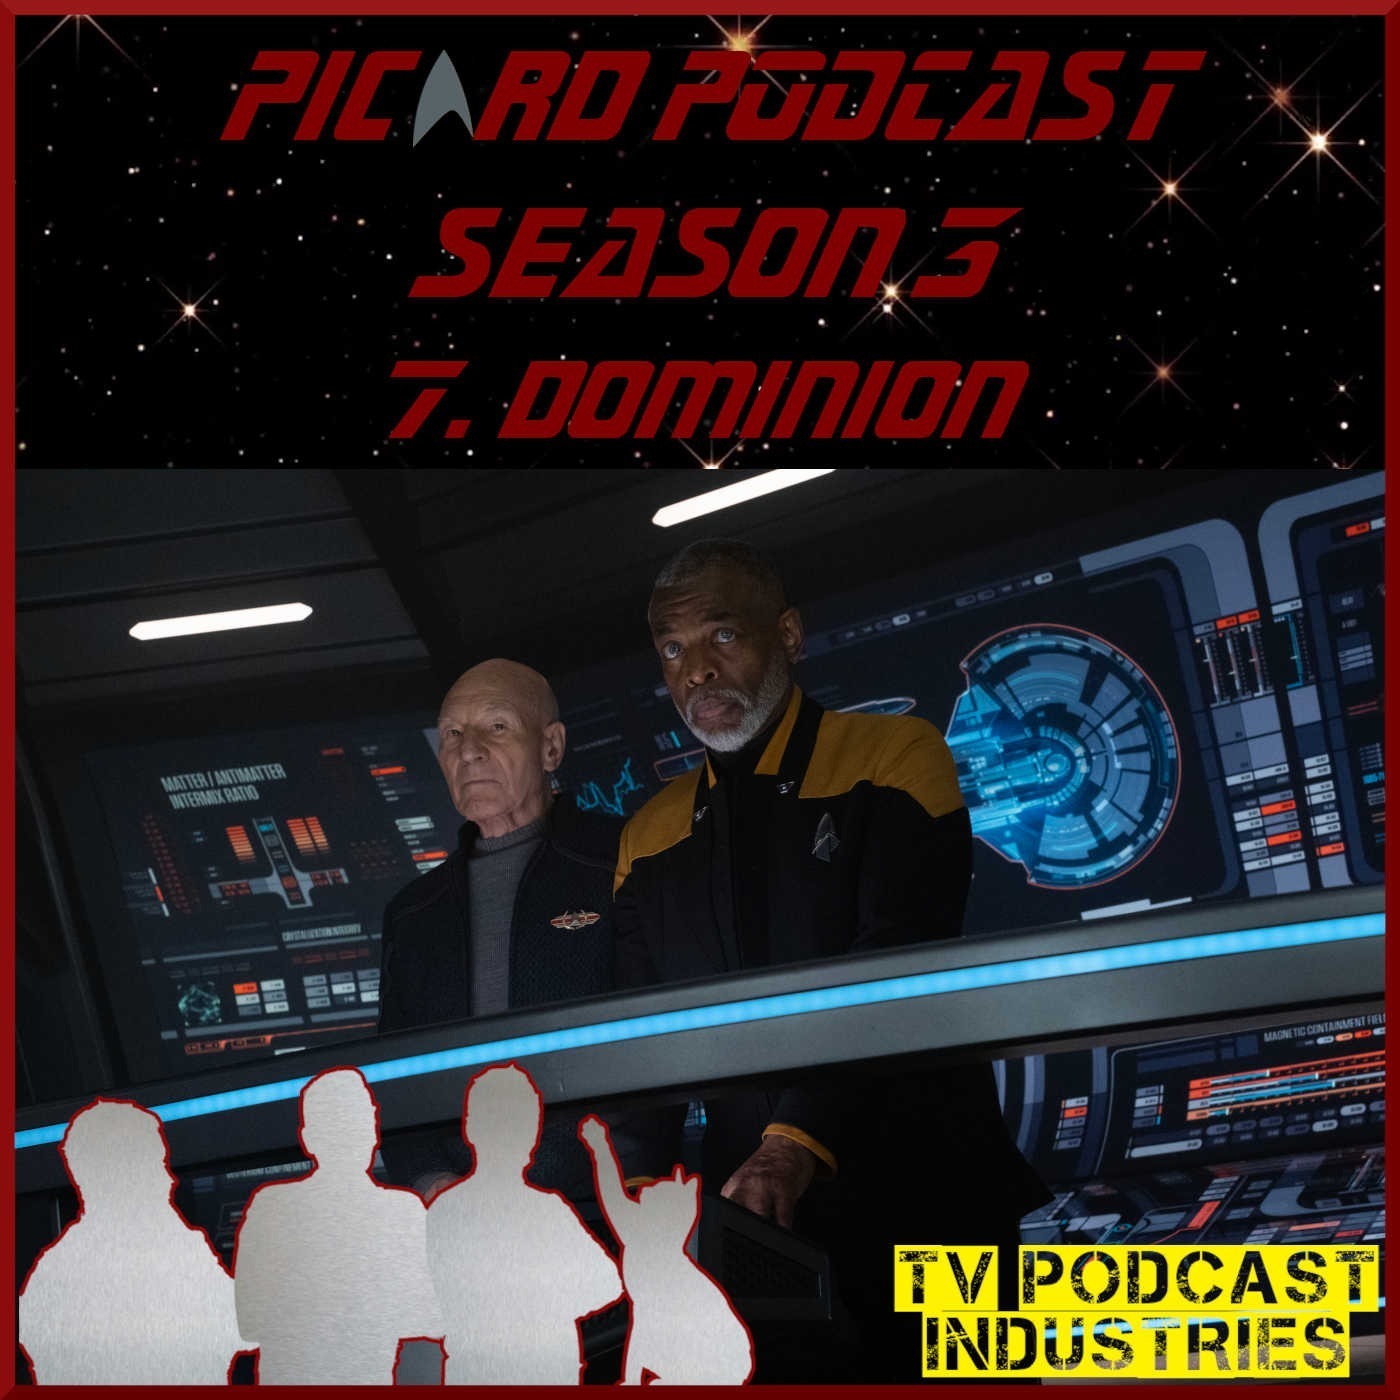 Star Trek Picard 307 ”Dominion” review